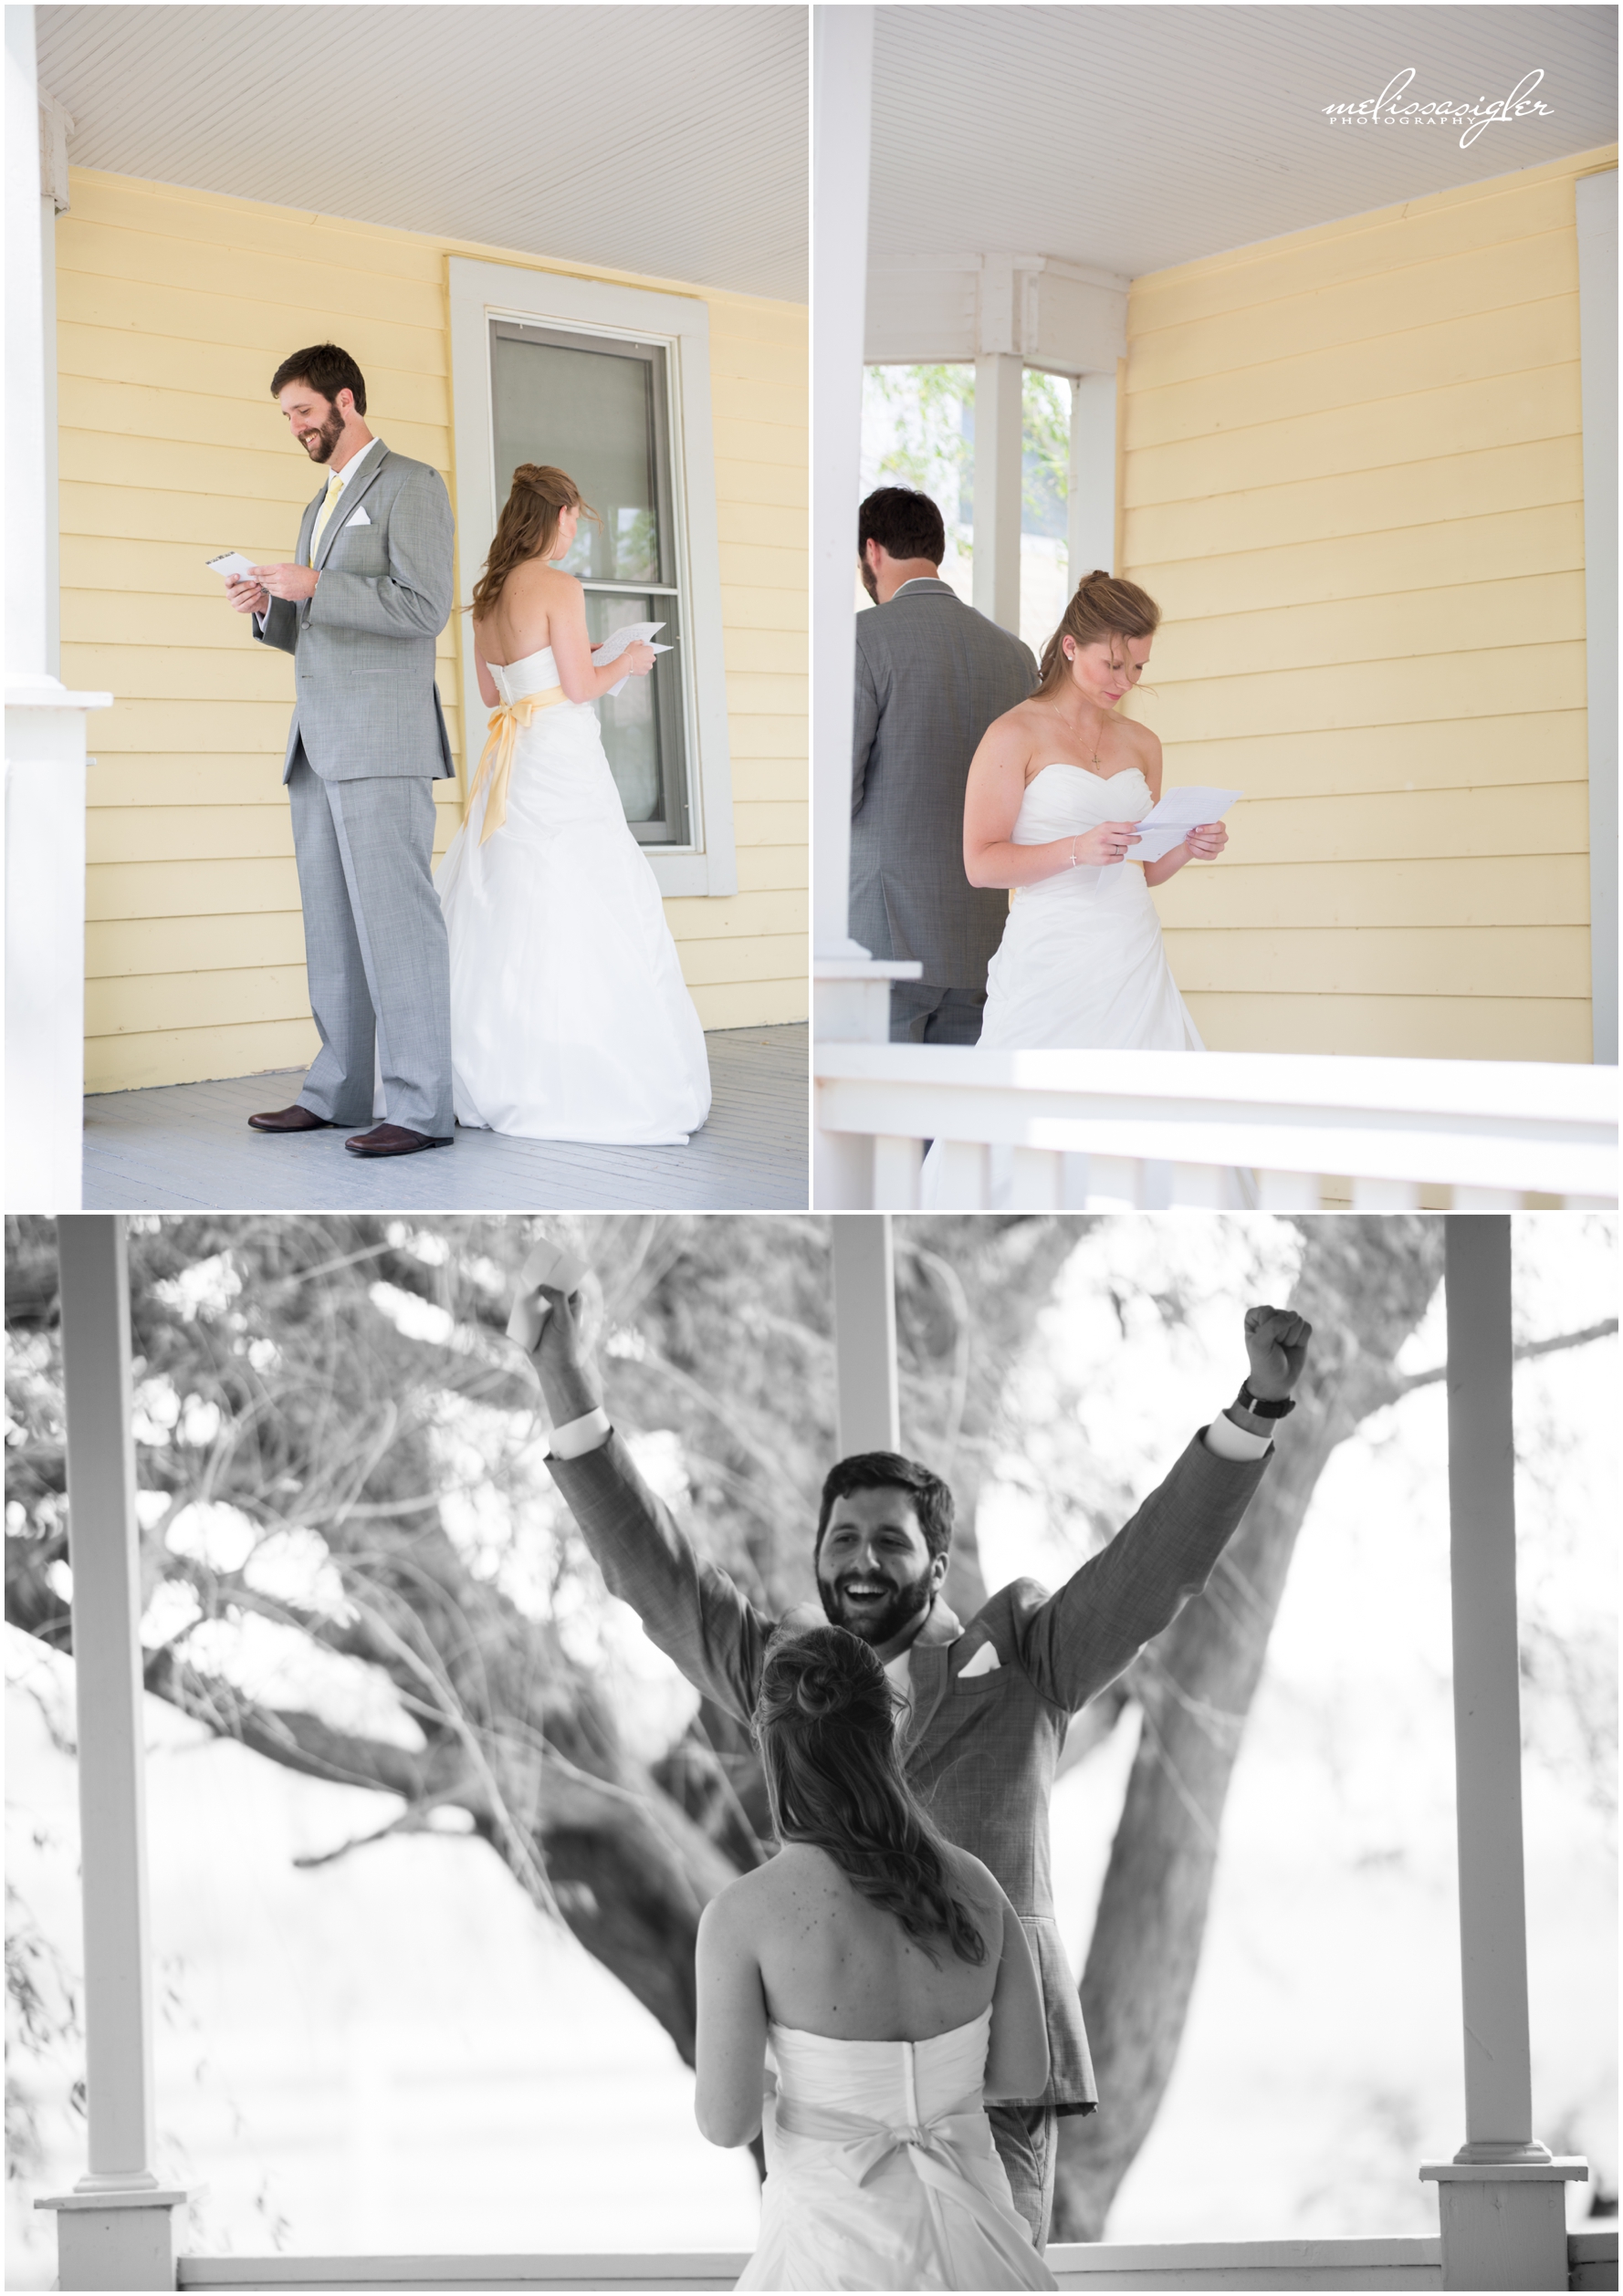 Bride and groom first look at Victorian Veranda by Lawrence Kansas wedding photographer Melissa Sigler